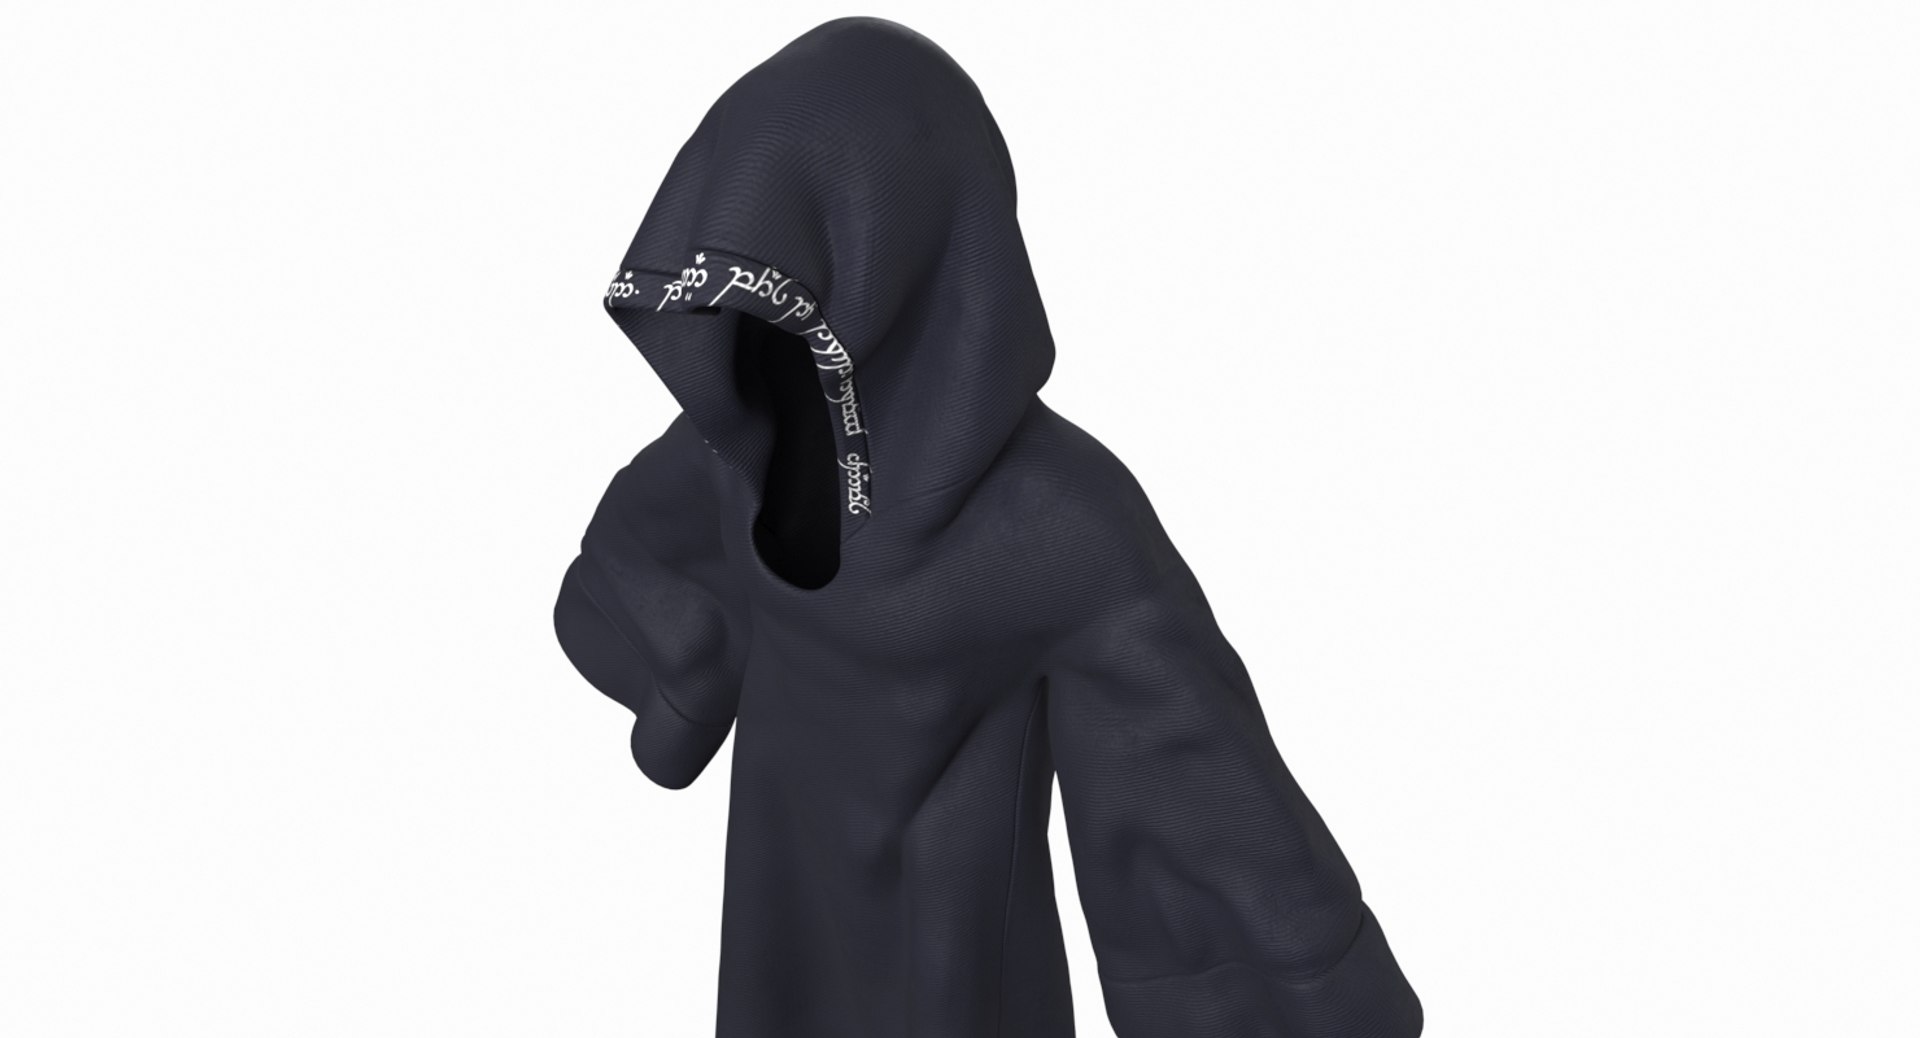 Grim reaper cloak 3D model - TurboSquid 1367272